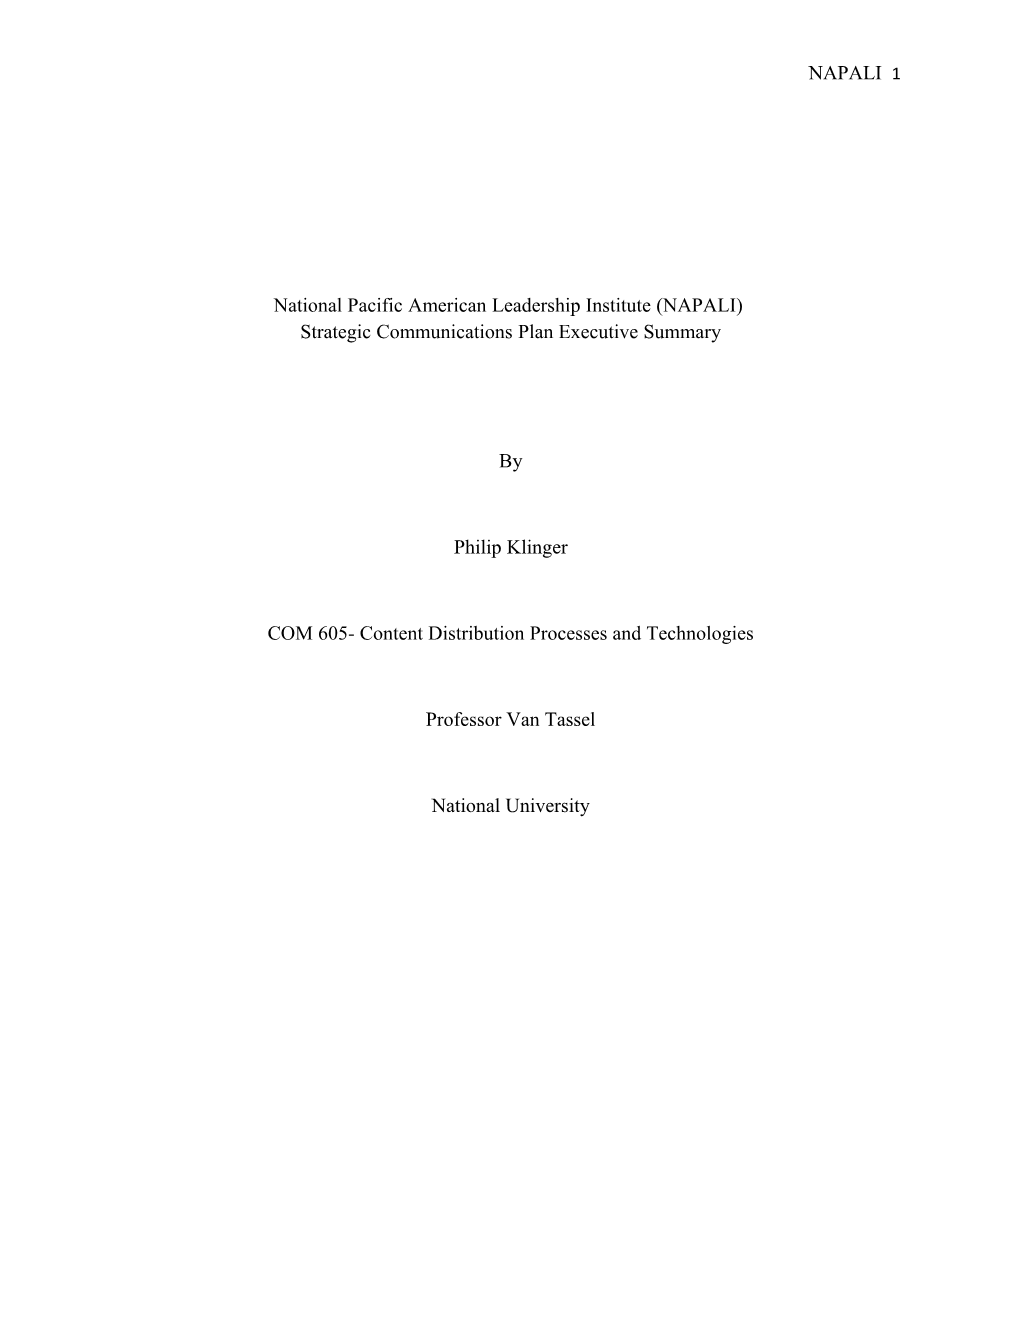 COM 605-Content Distribution Processes and Technologies